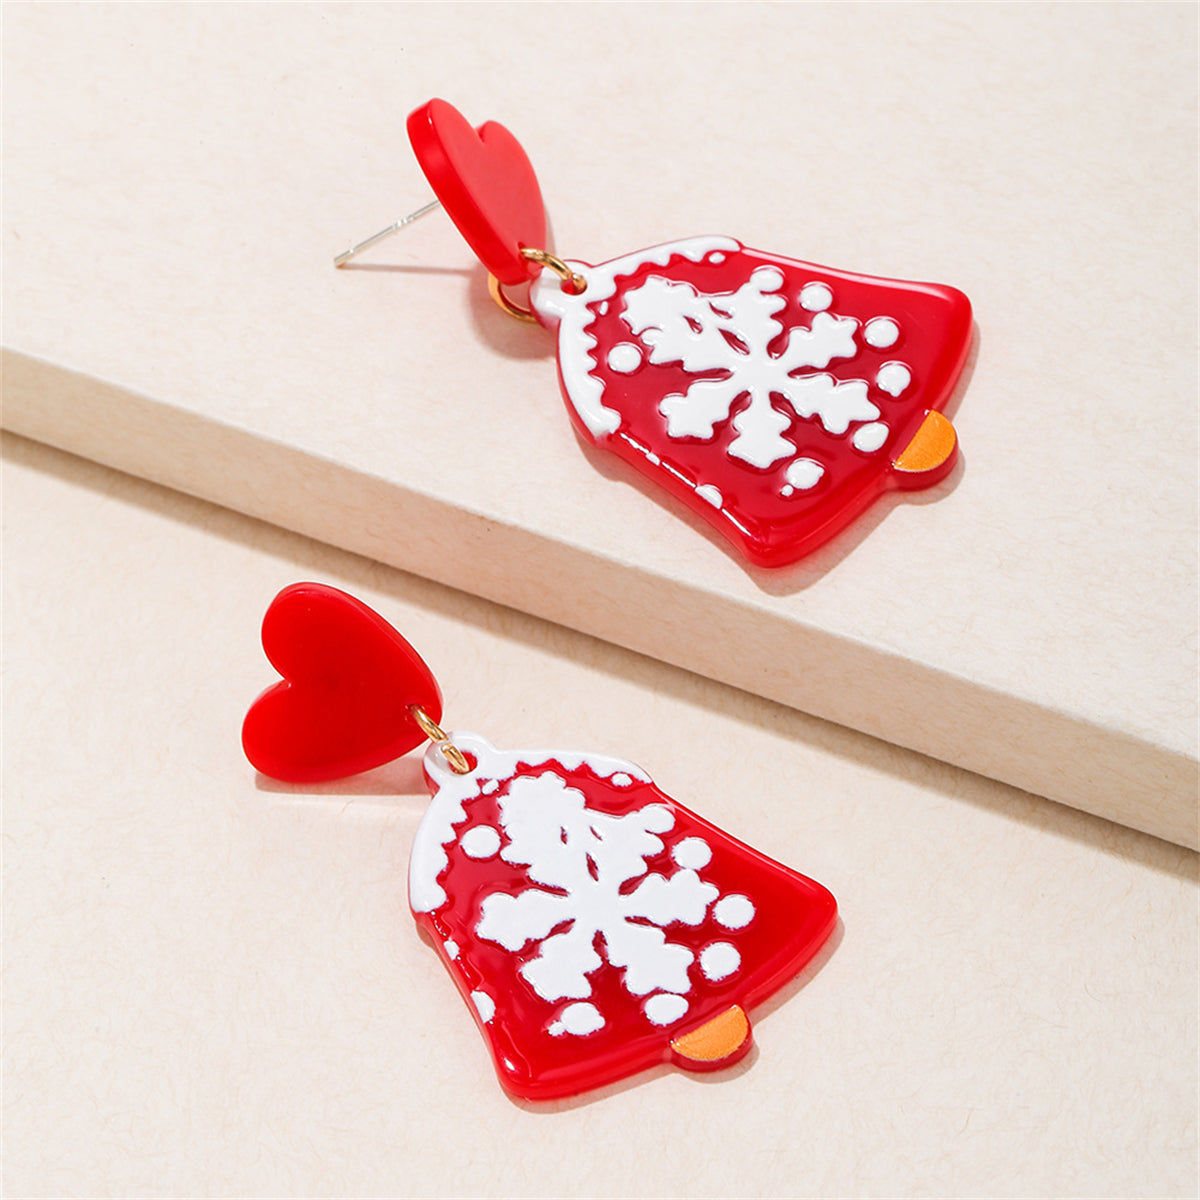 Red & White Snowflake Bell Drop Earrings